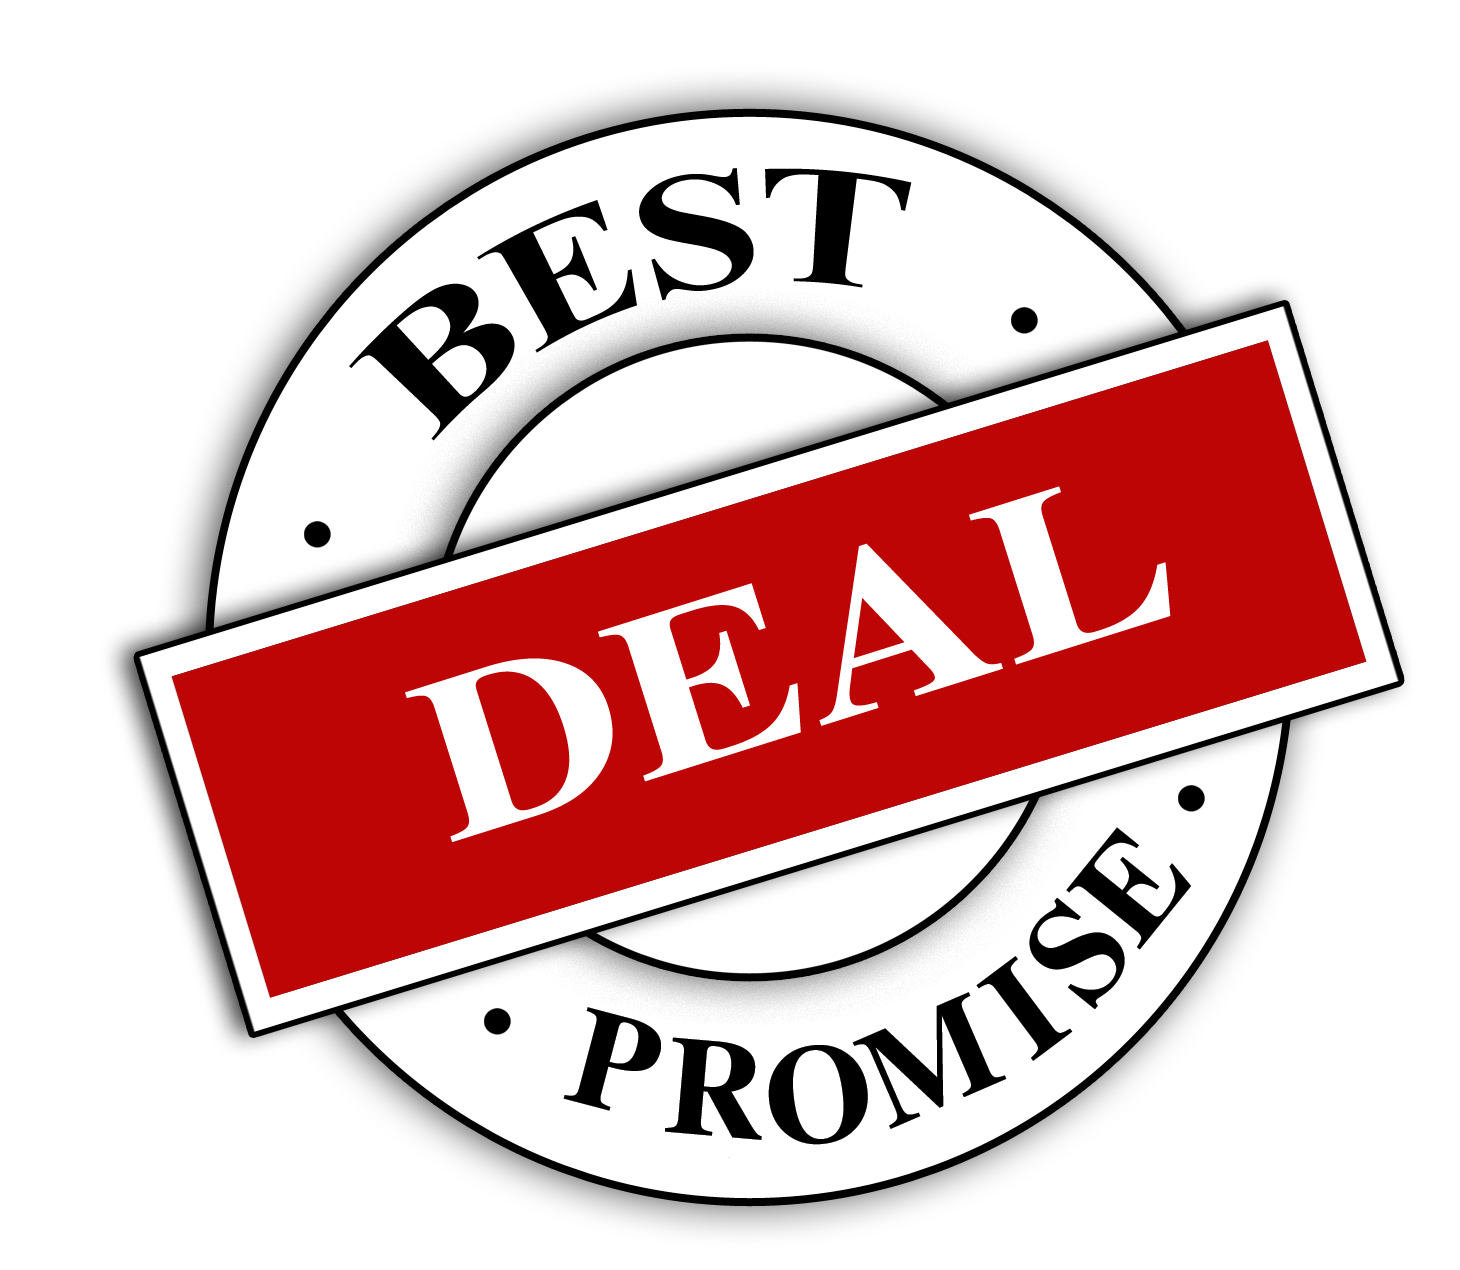 Best deal. Best deals логотип. Deal картинки. Dealing лого. Deal com